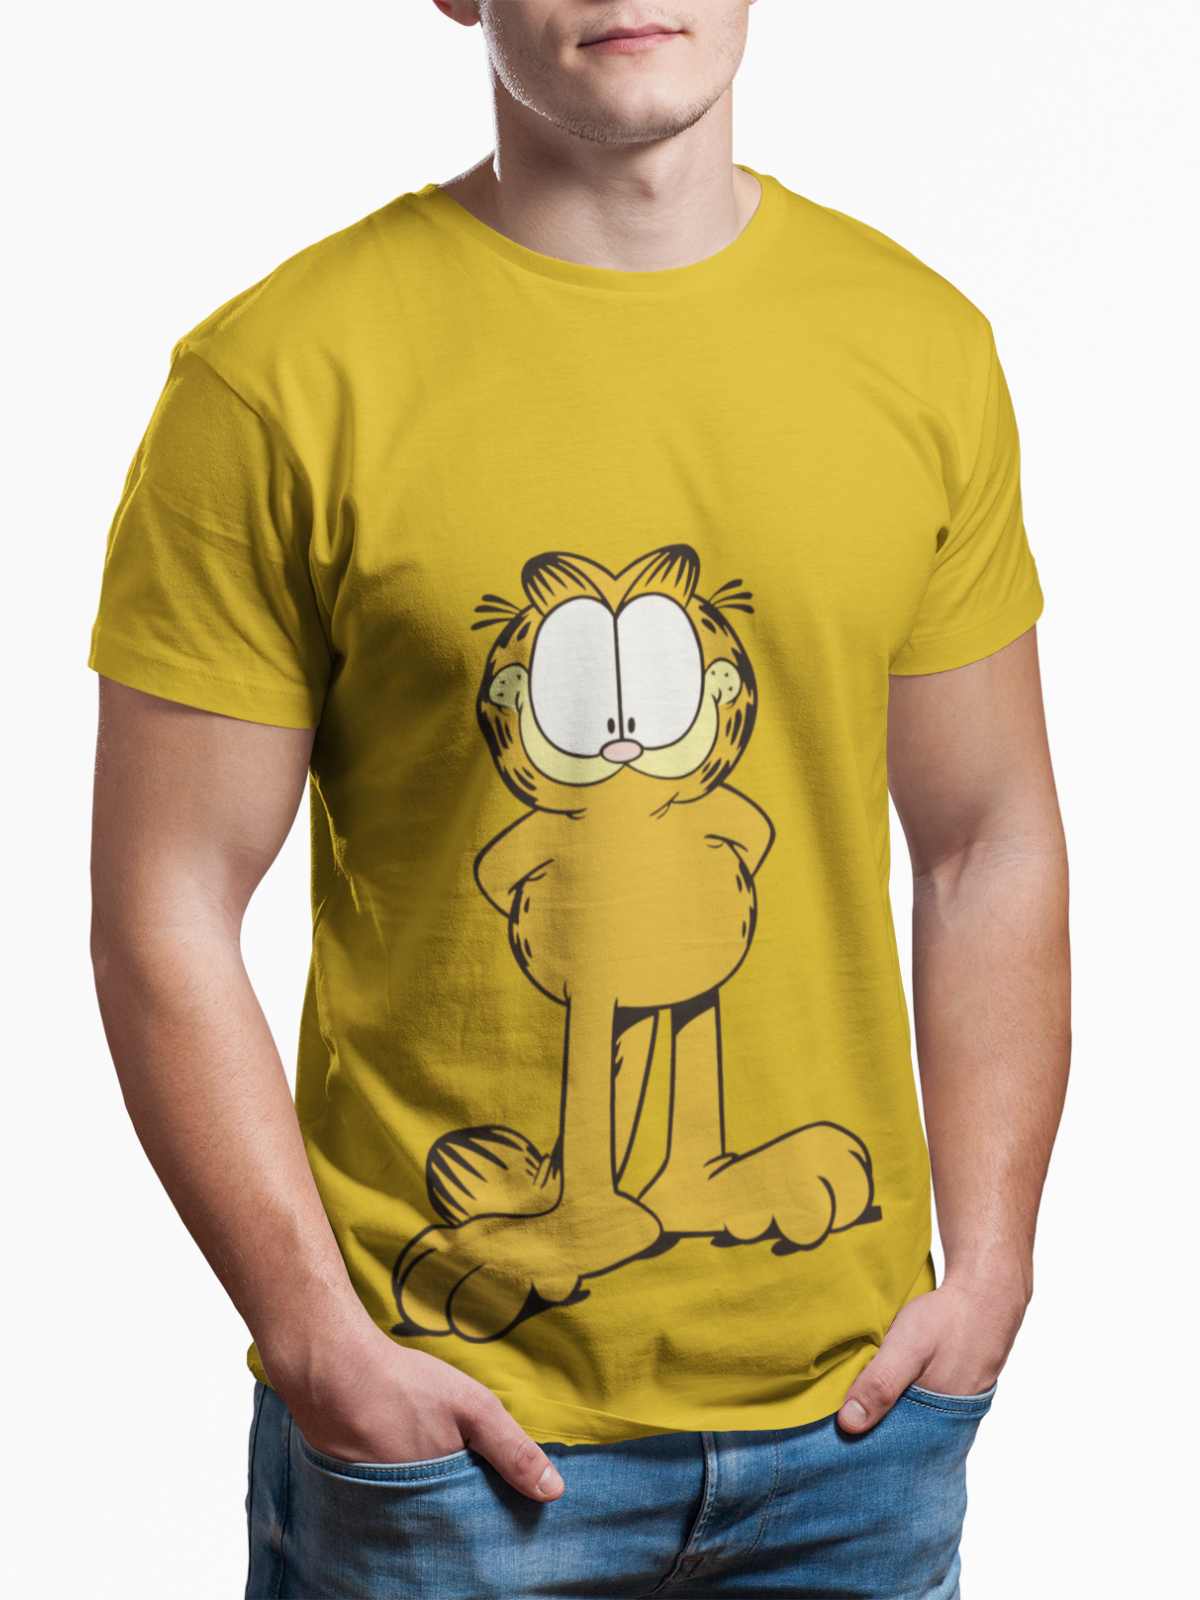 Cool: Garfield